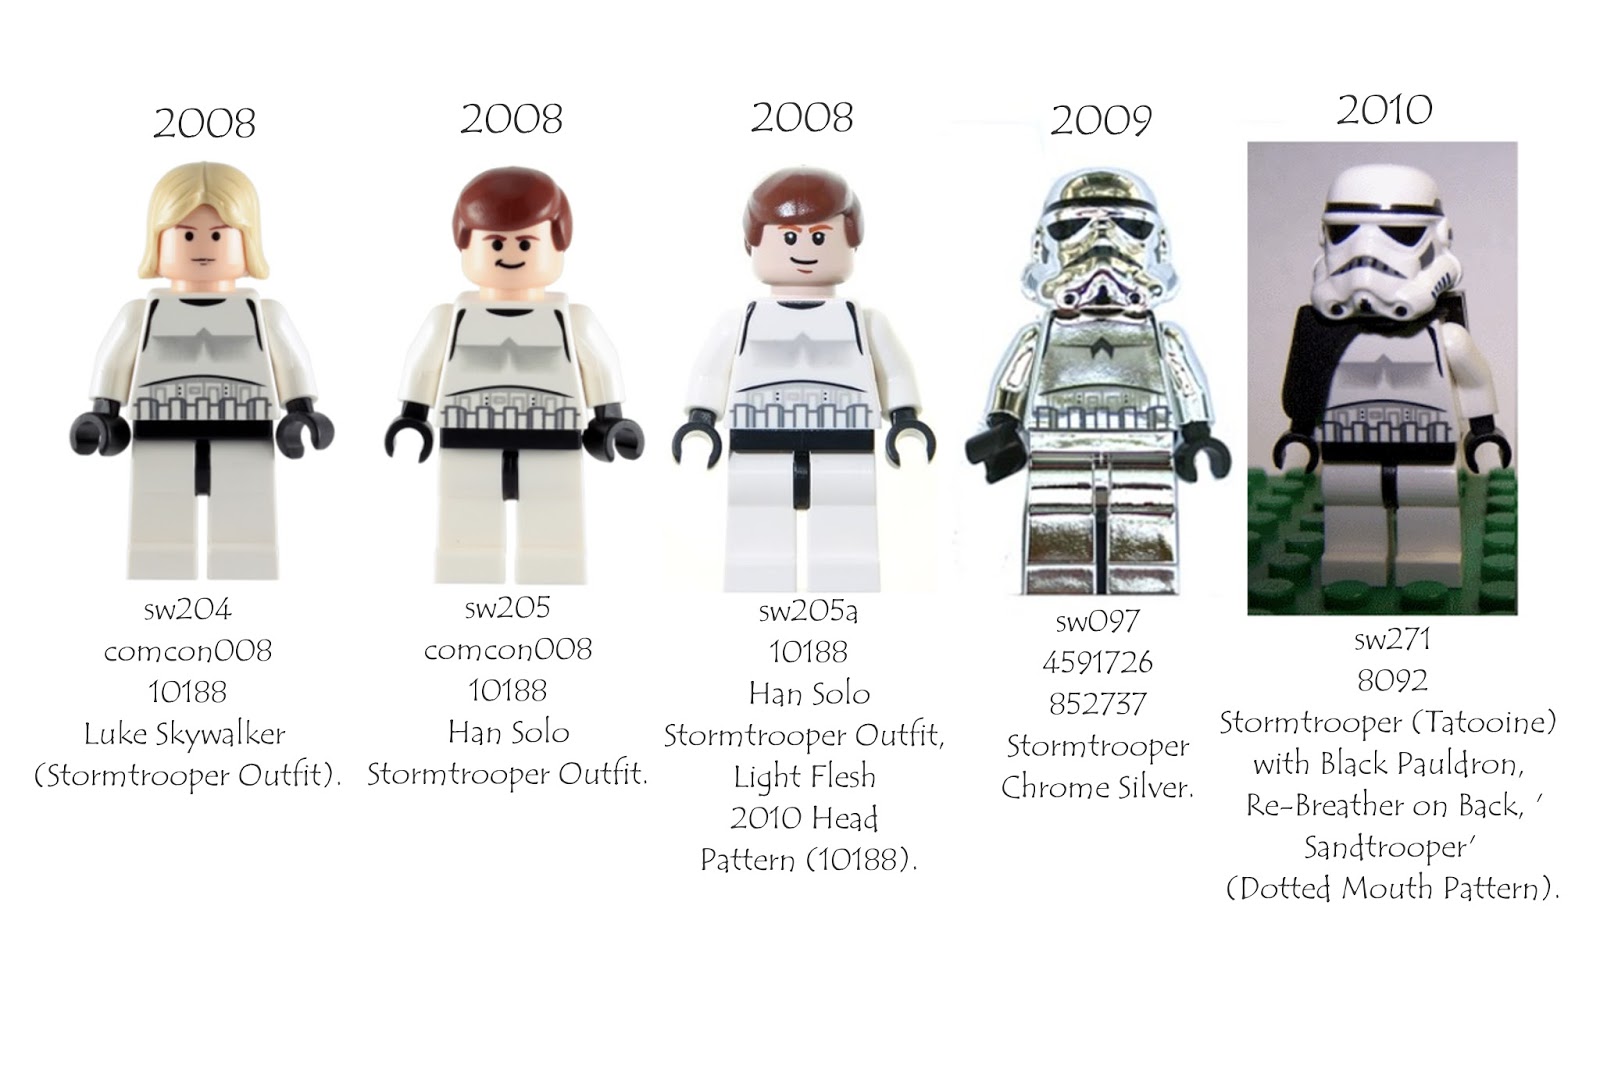 LEGO Star Wars Tatooine Stormtrooper With Black Pauldron /& Re-Breather Set 8092